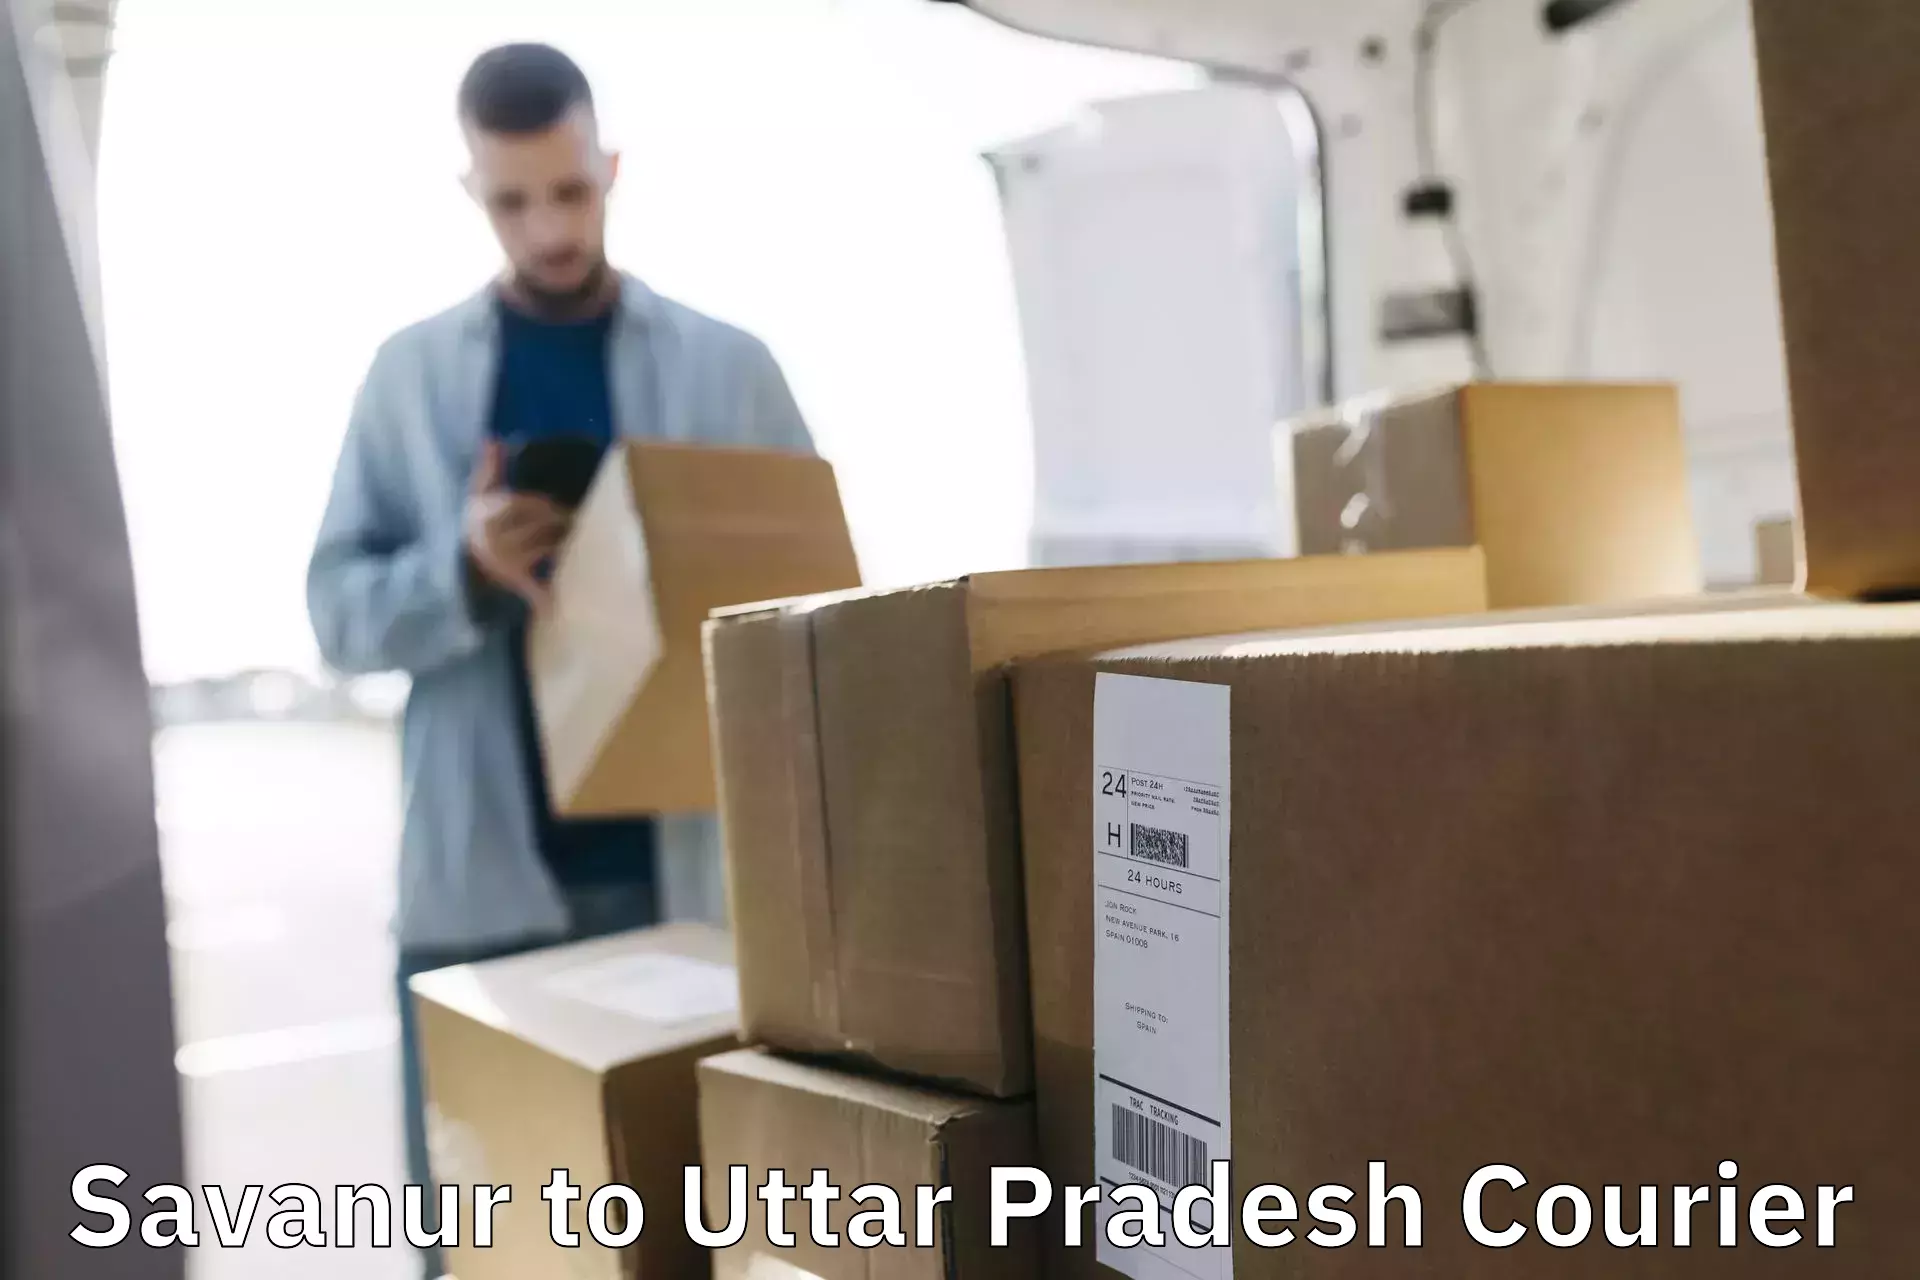 Multi-service courier options Savanur to Noida